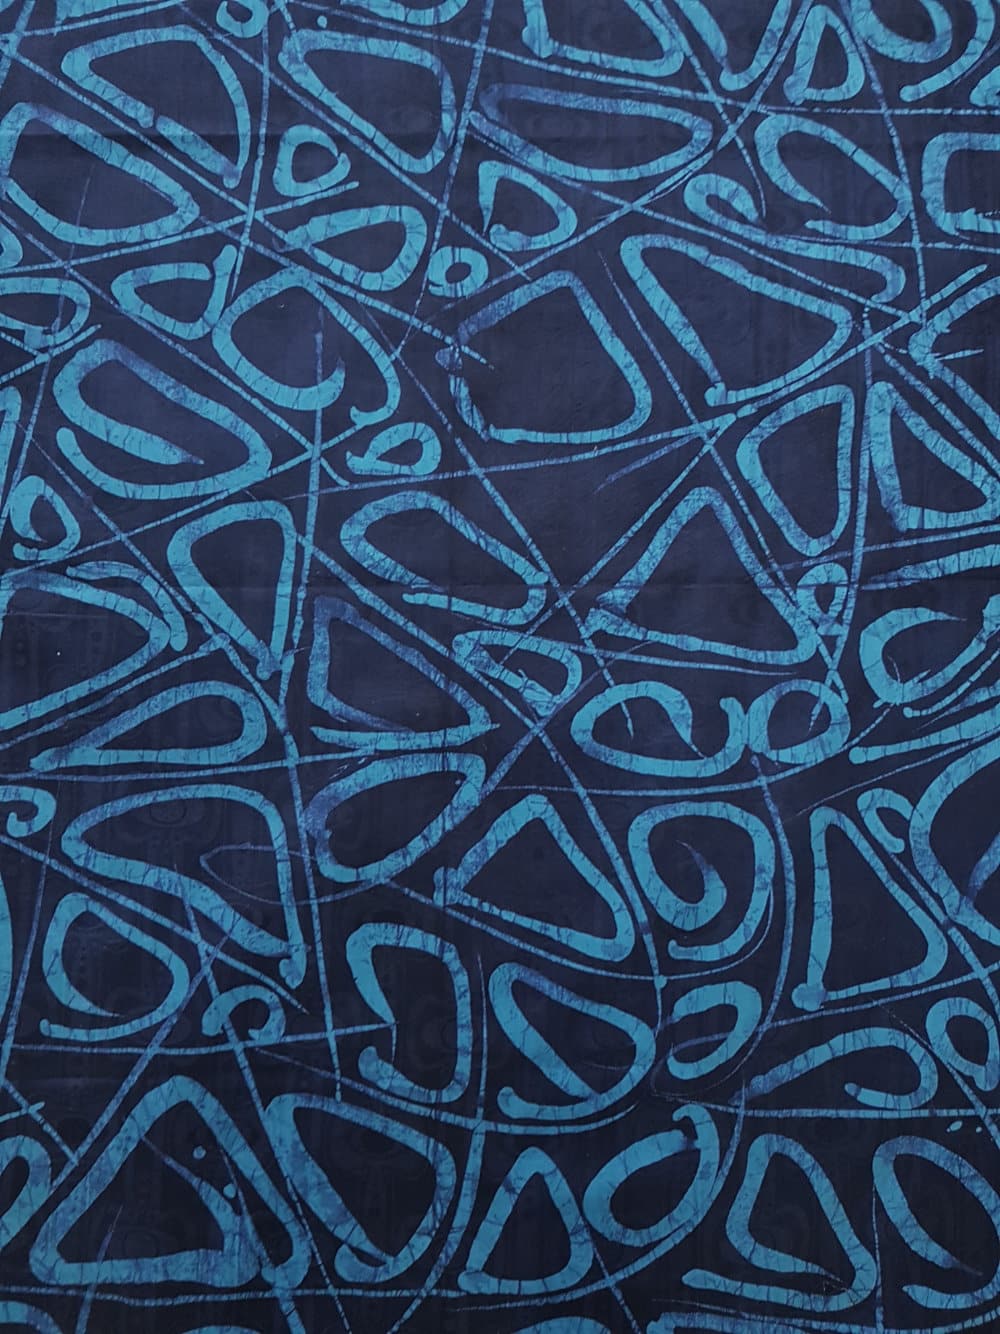 Turquoise and Blue-Black African Batik- 2.4 Yards - Urbanstax